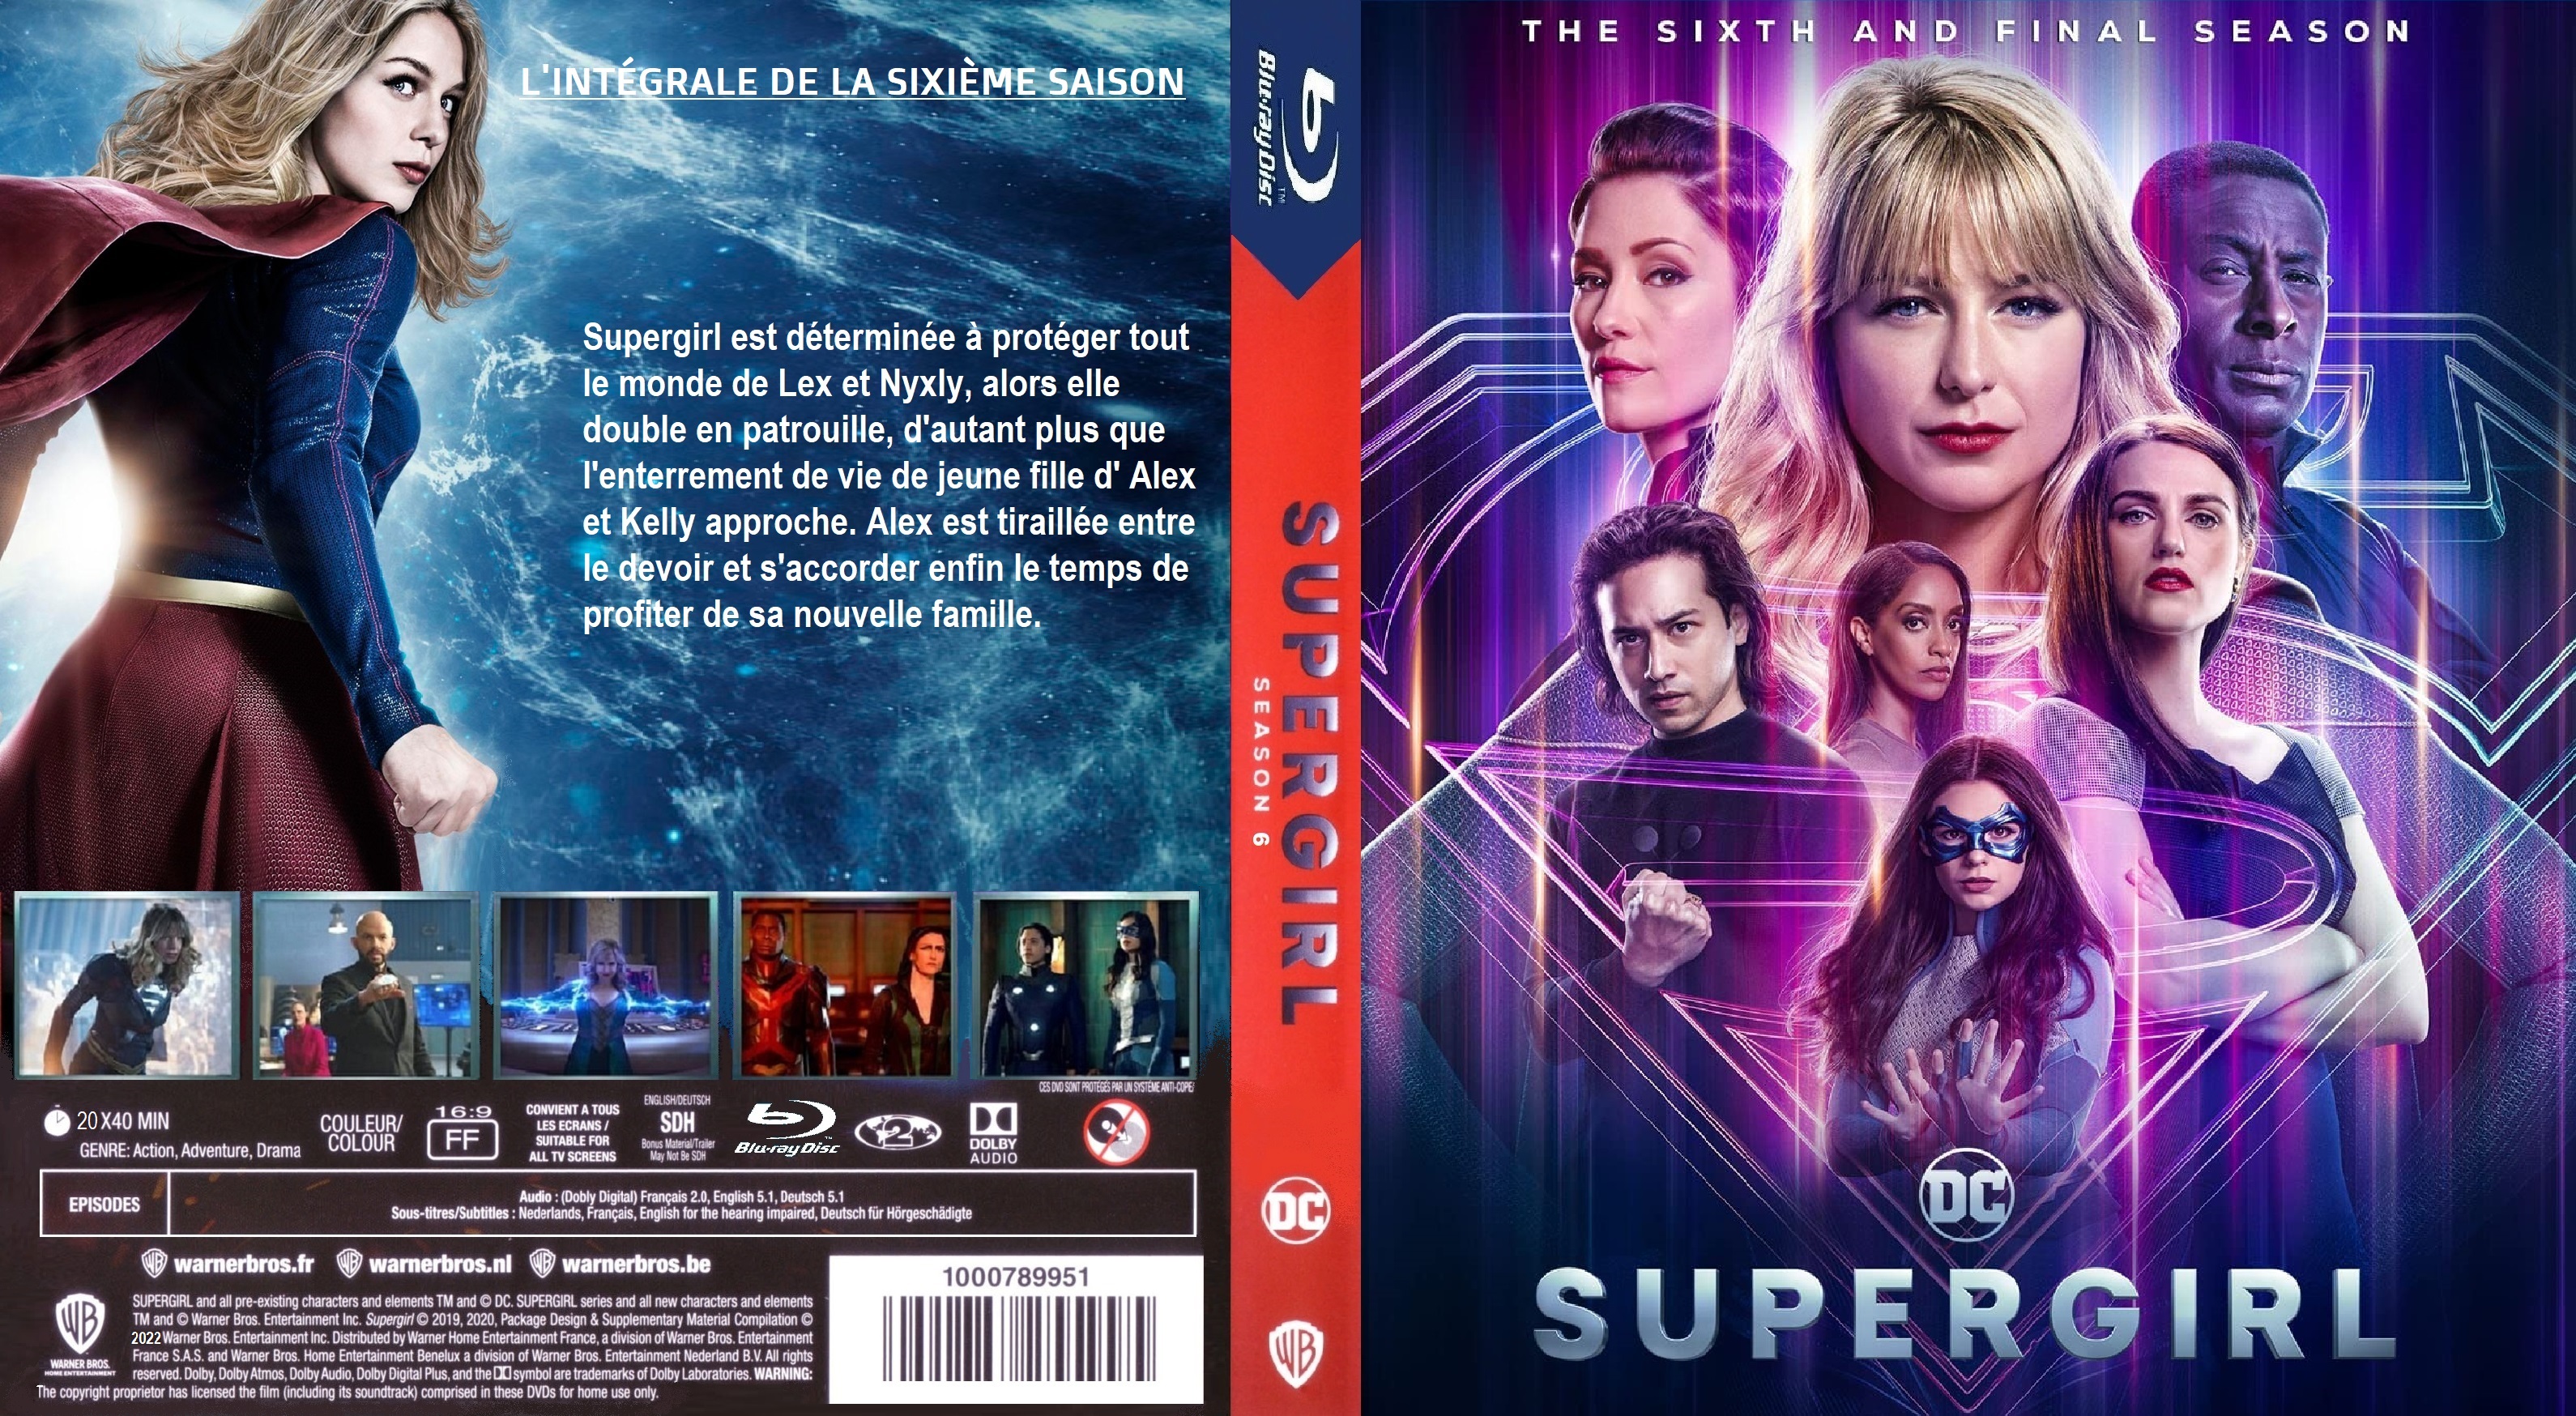 Jaquette DVD Supergirl saison 6 custom (BLU-RAY)